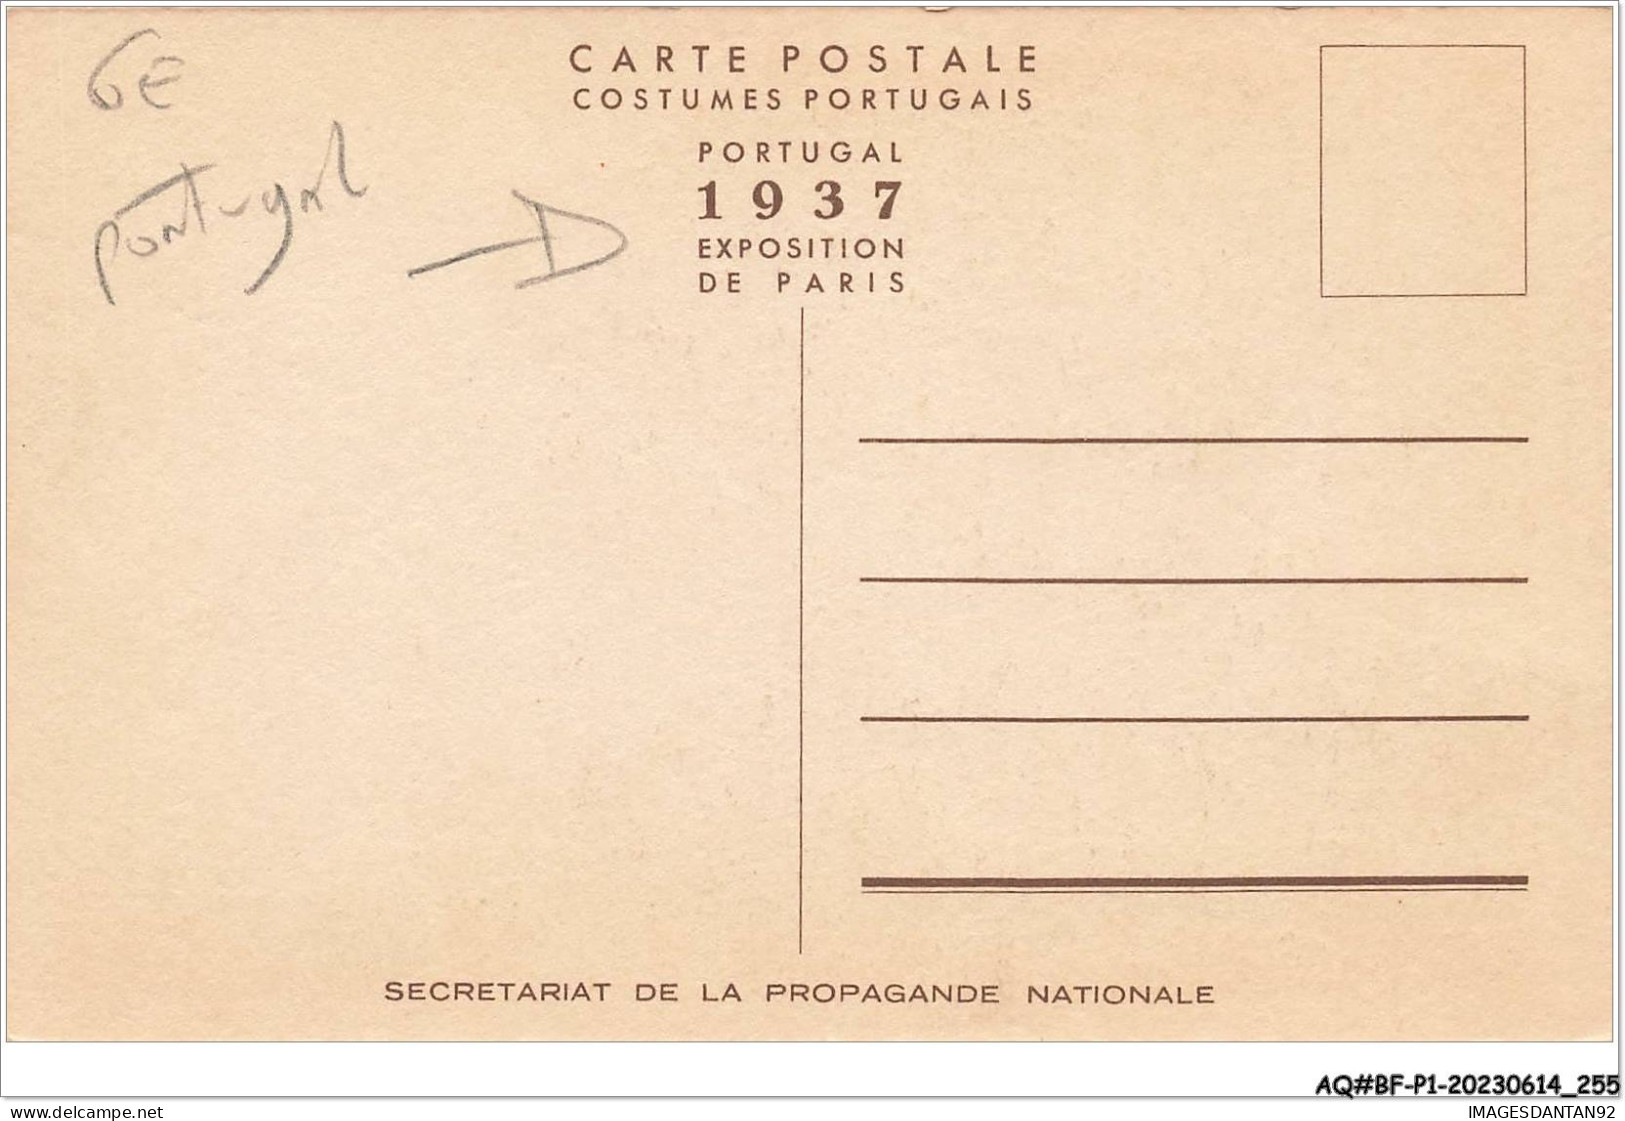 AQ#BFP1-PORTUGAL - 0127 - VIANA DO CASTELO - Femme Du Peuple - Exposition De Paris 1937 - Castelo Branco